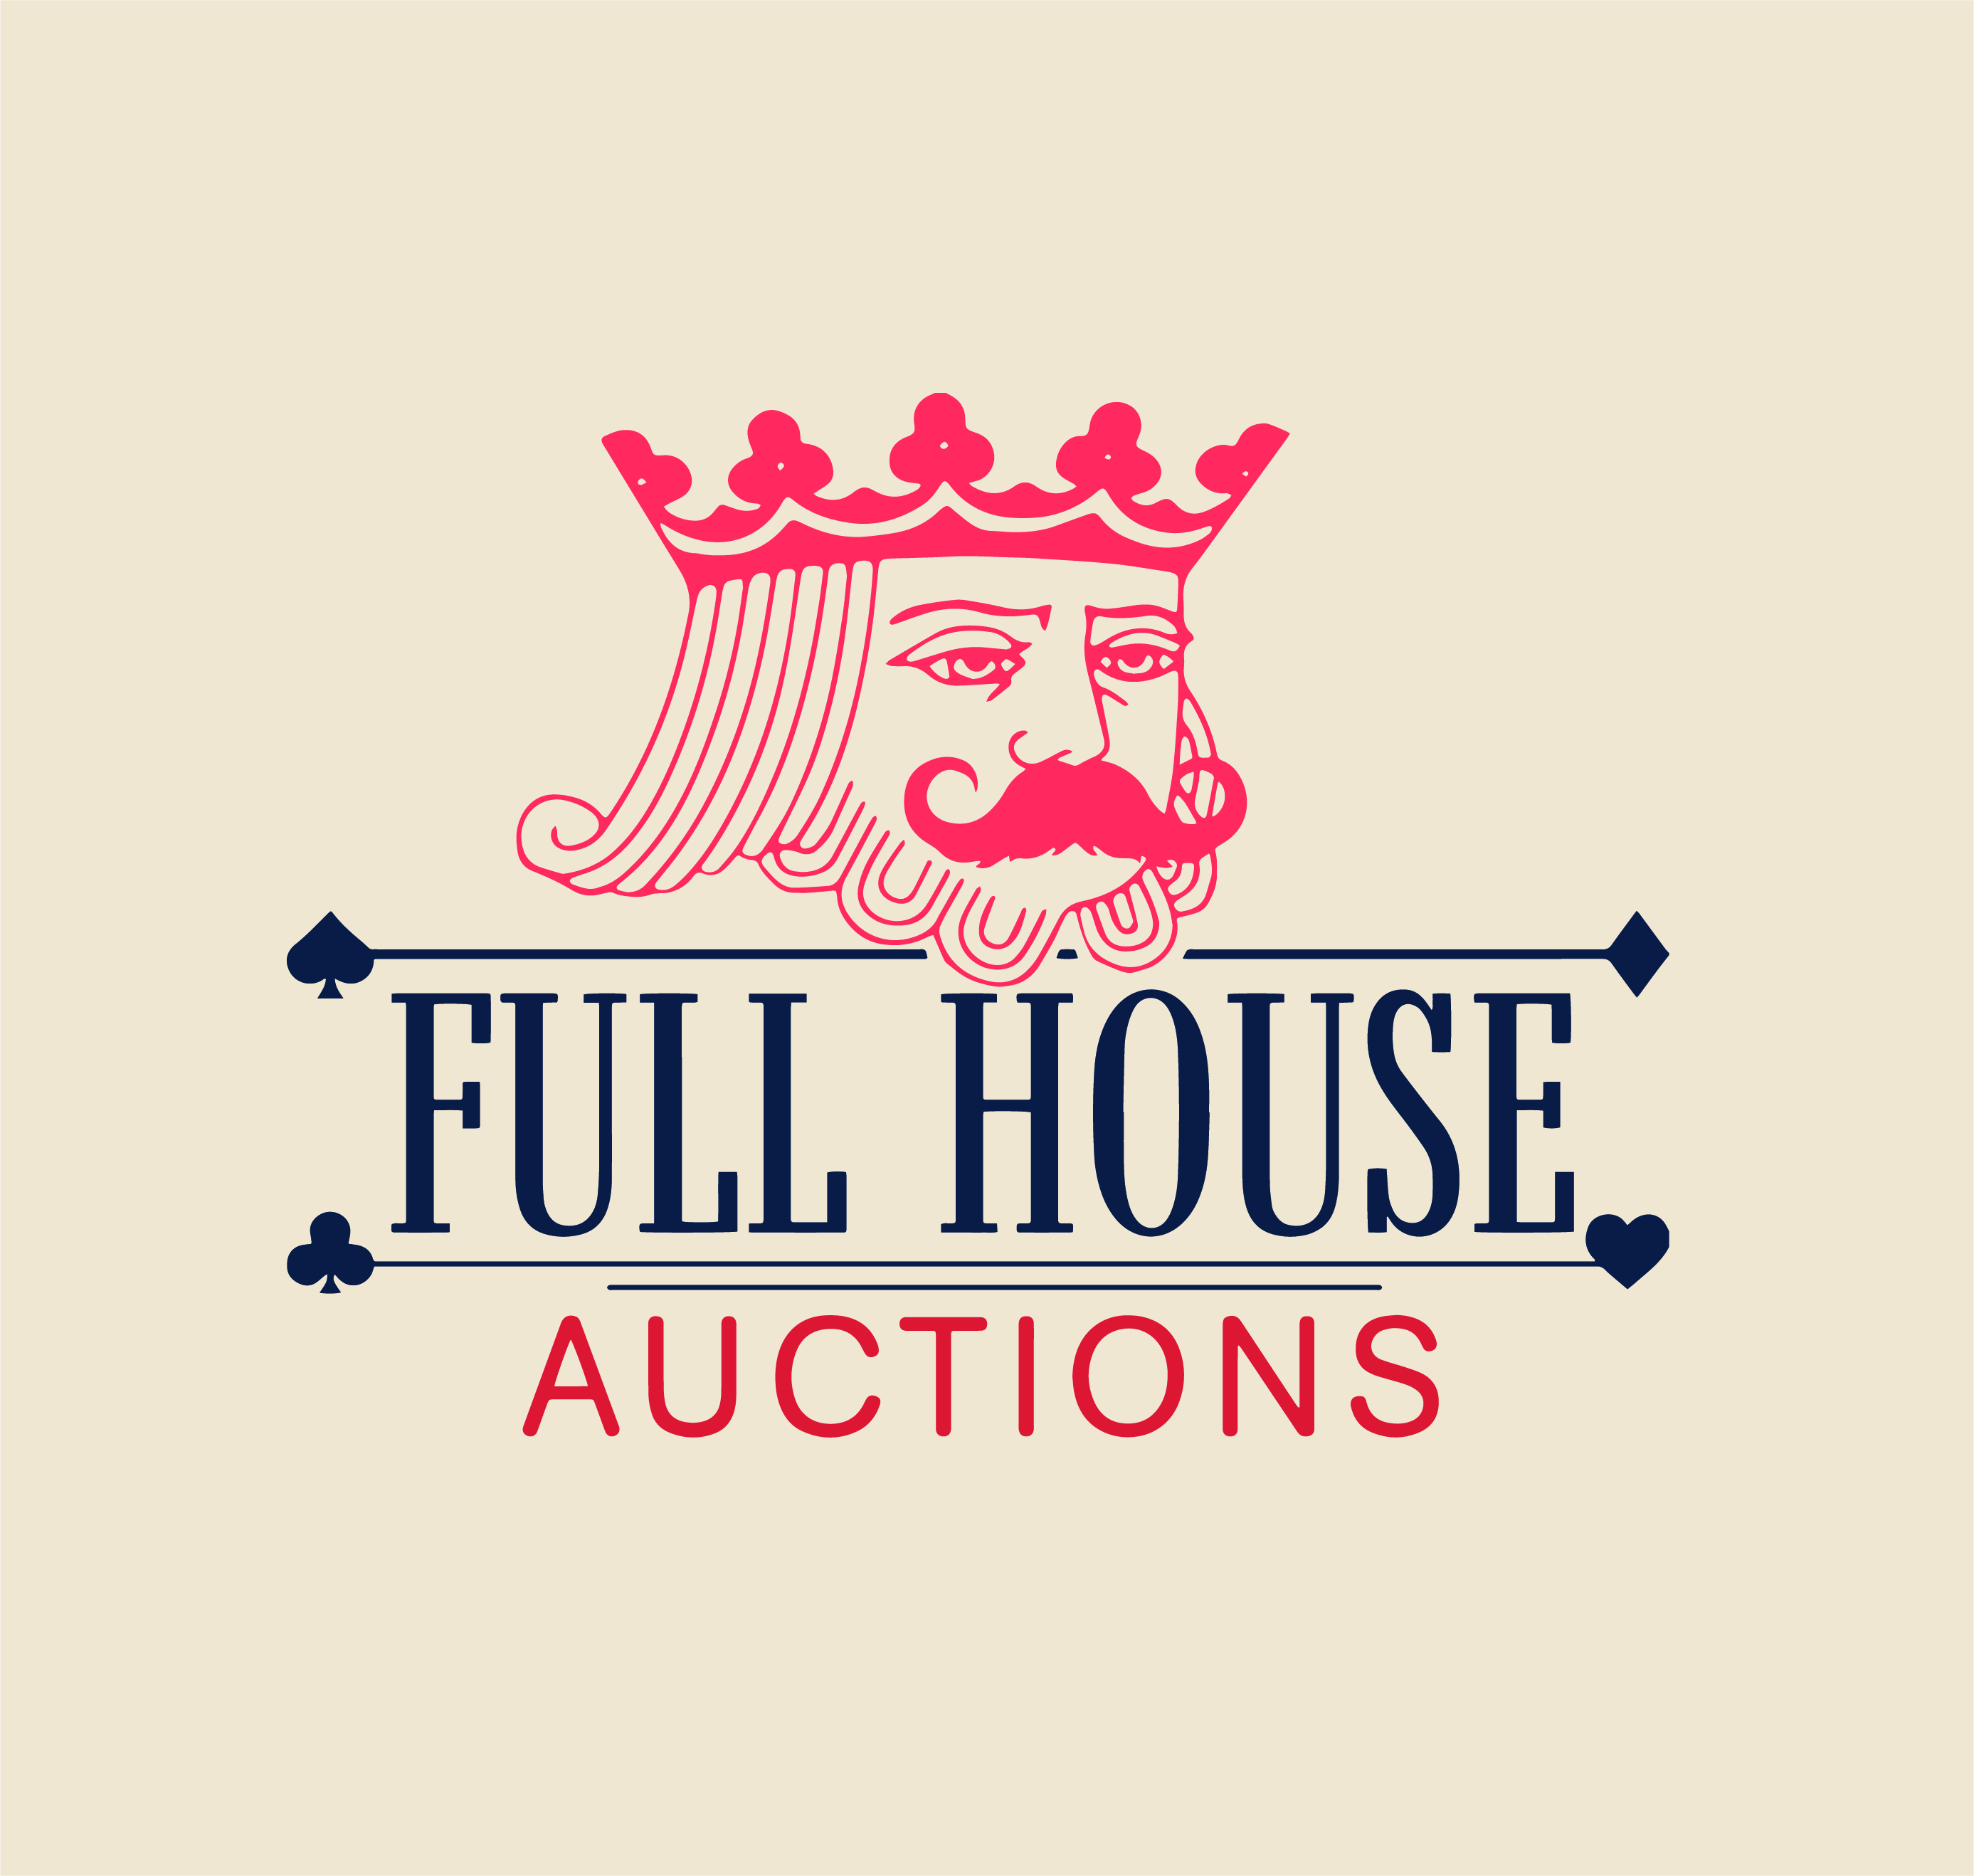 Full House Auctions | AuctionNinja